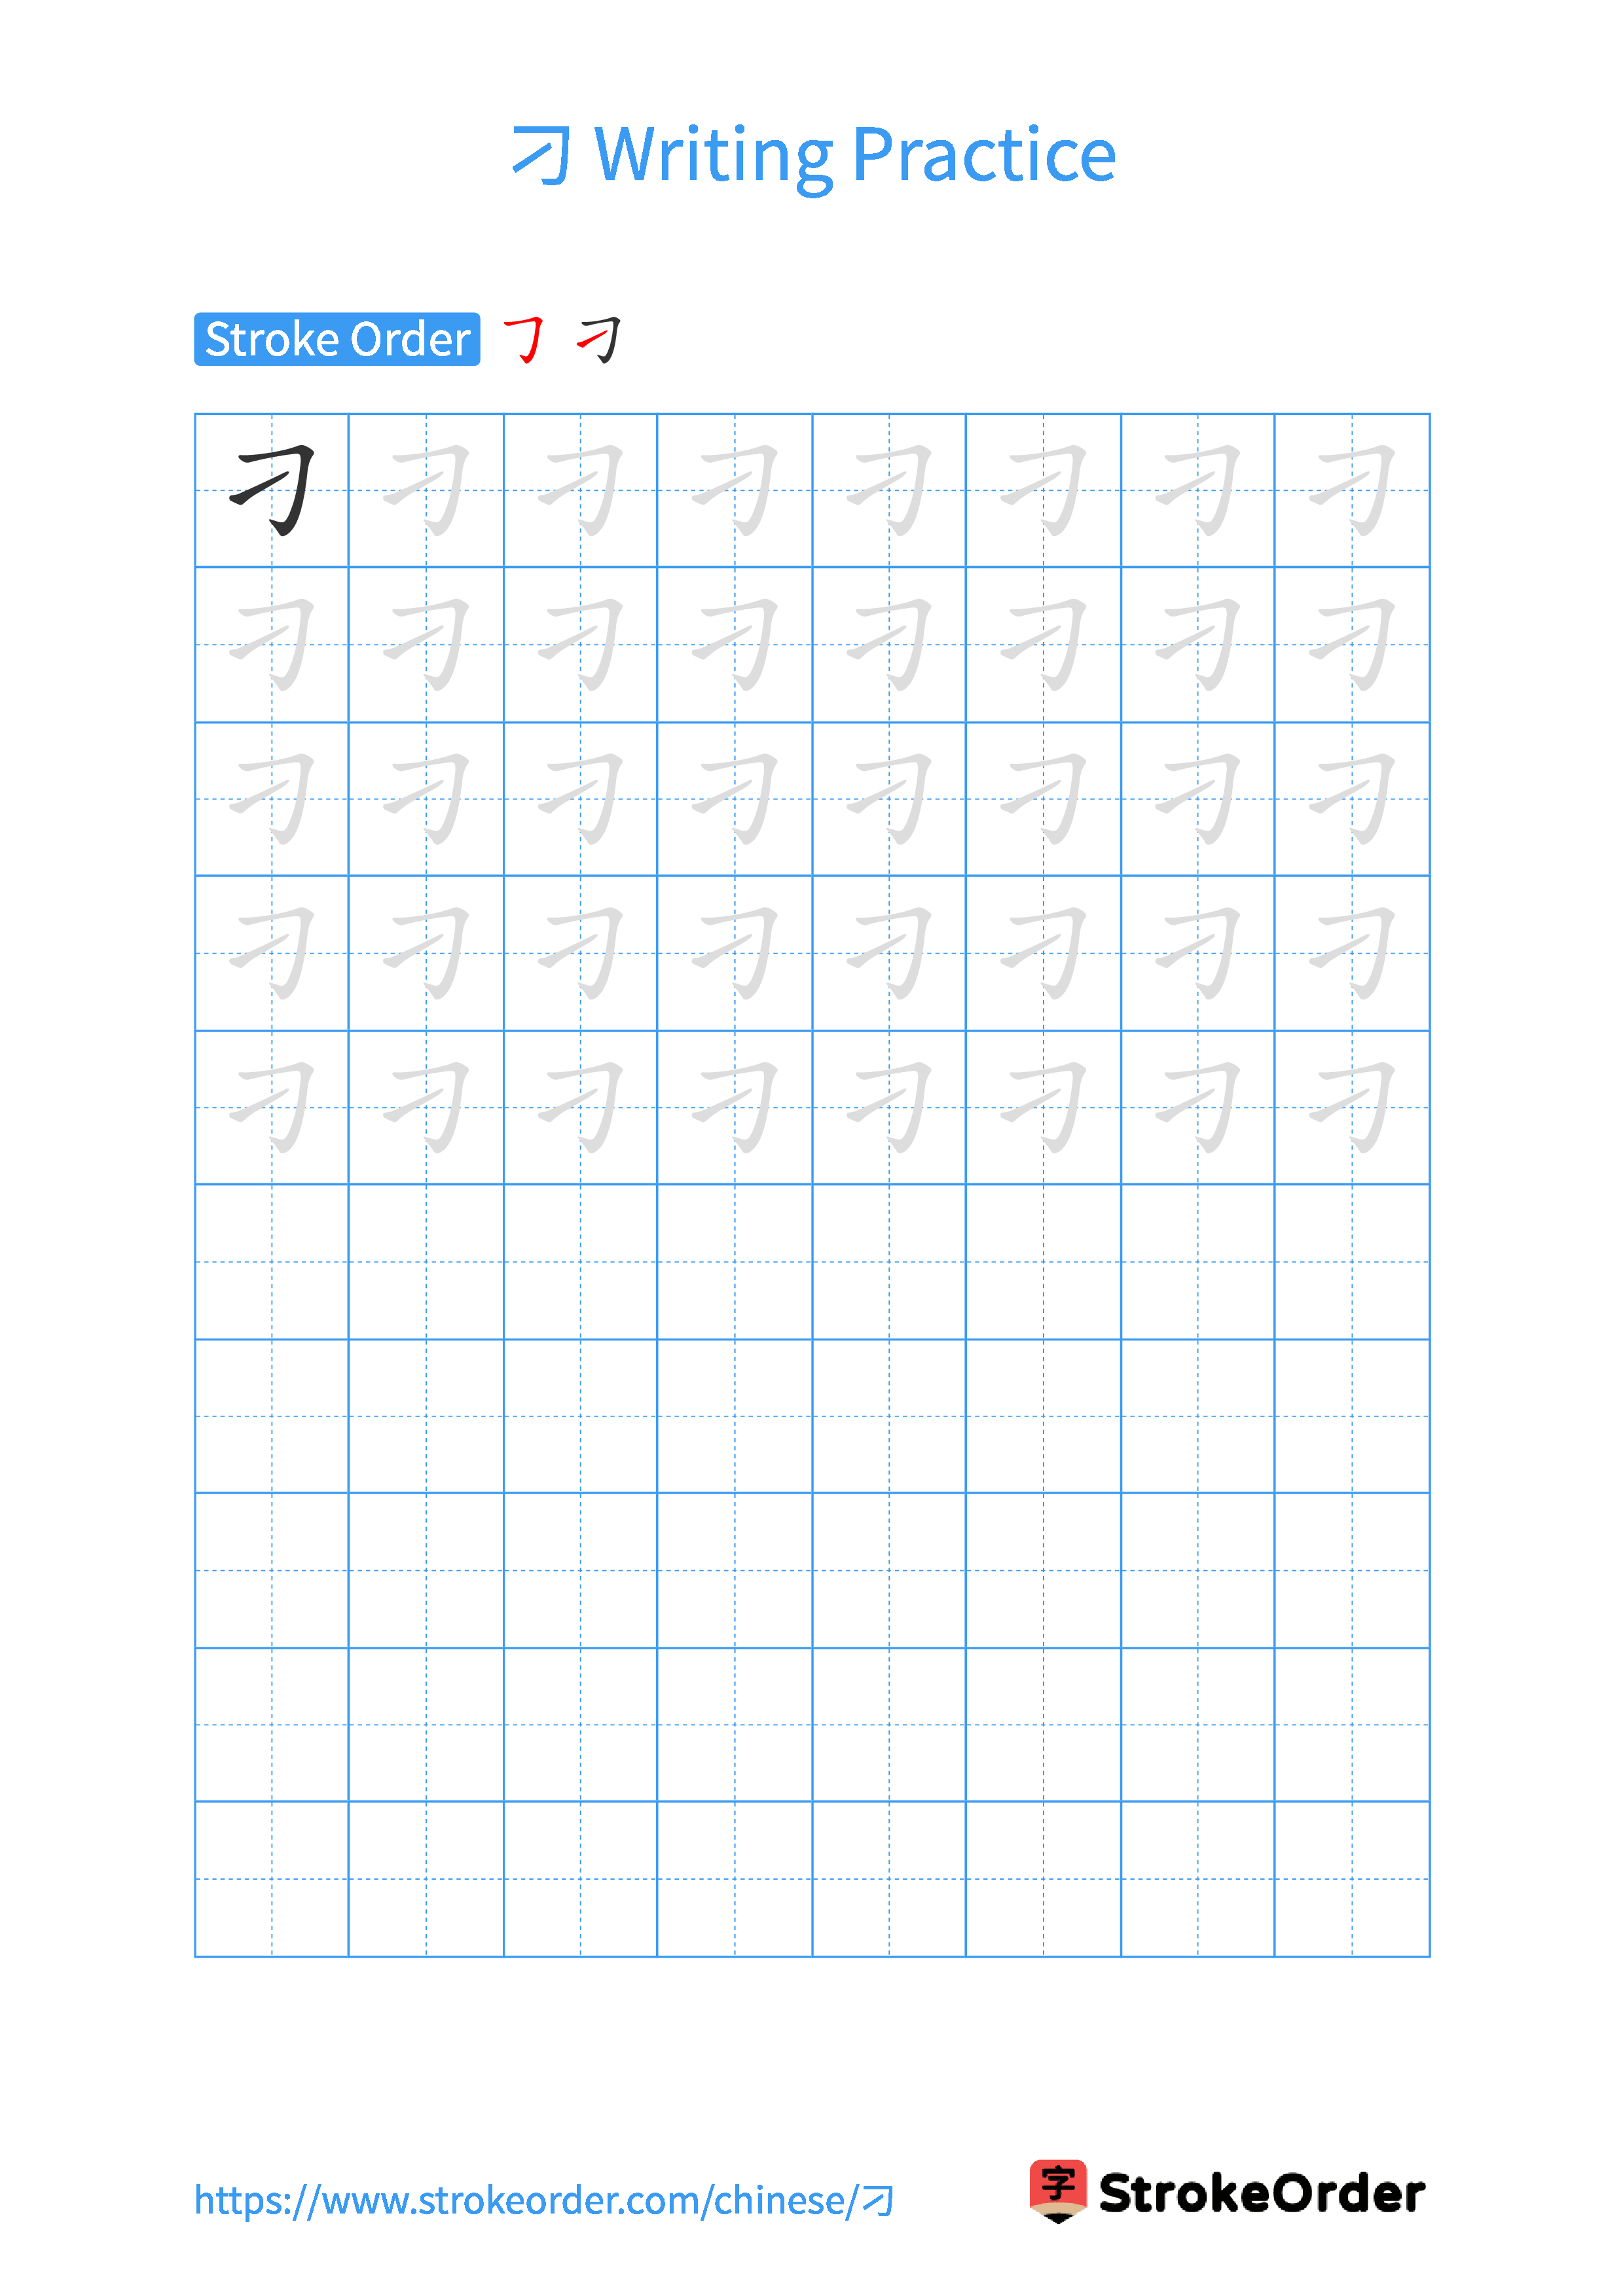 Printable Handwriting Practice Worksheet of the Chinese character 刁 in Portrait Orientation (Tian Zi Ge)